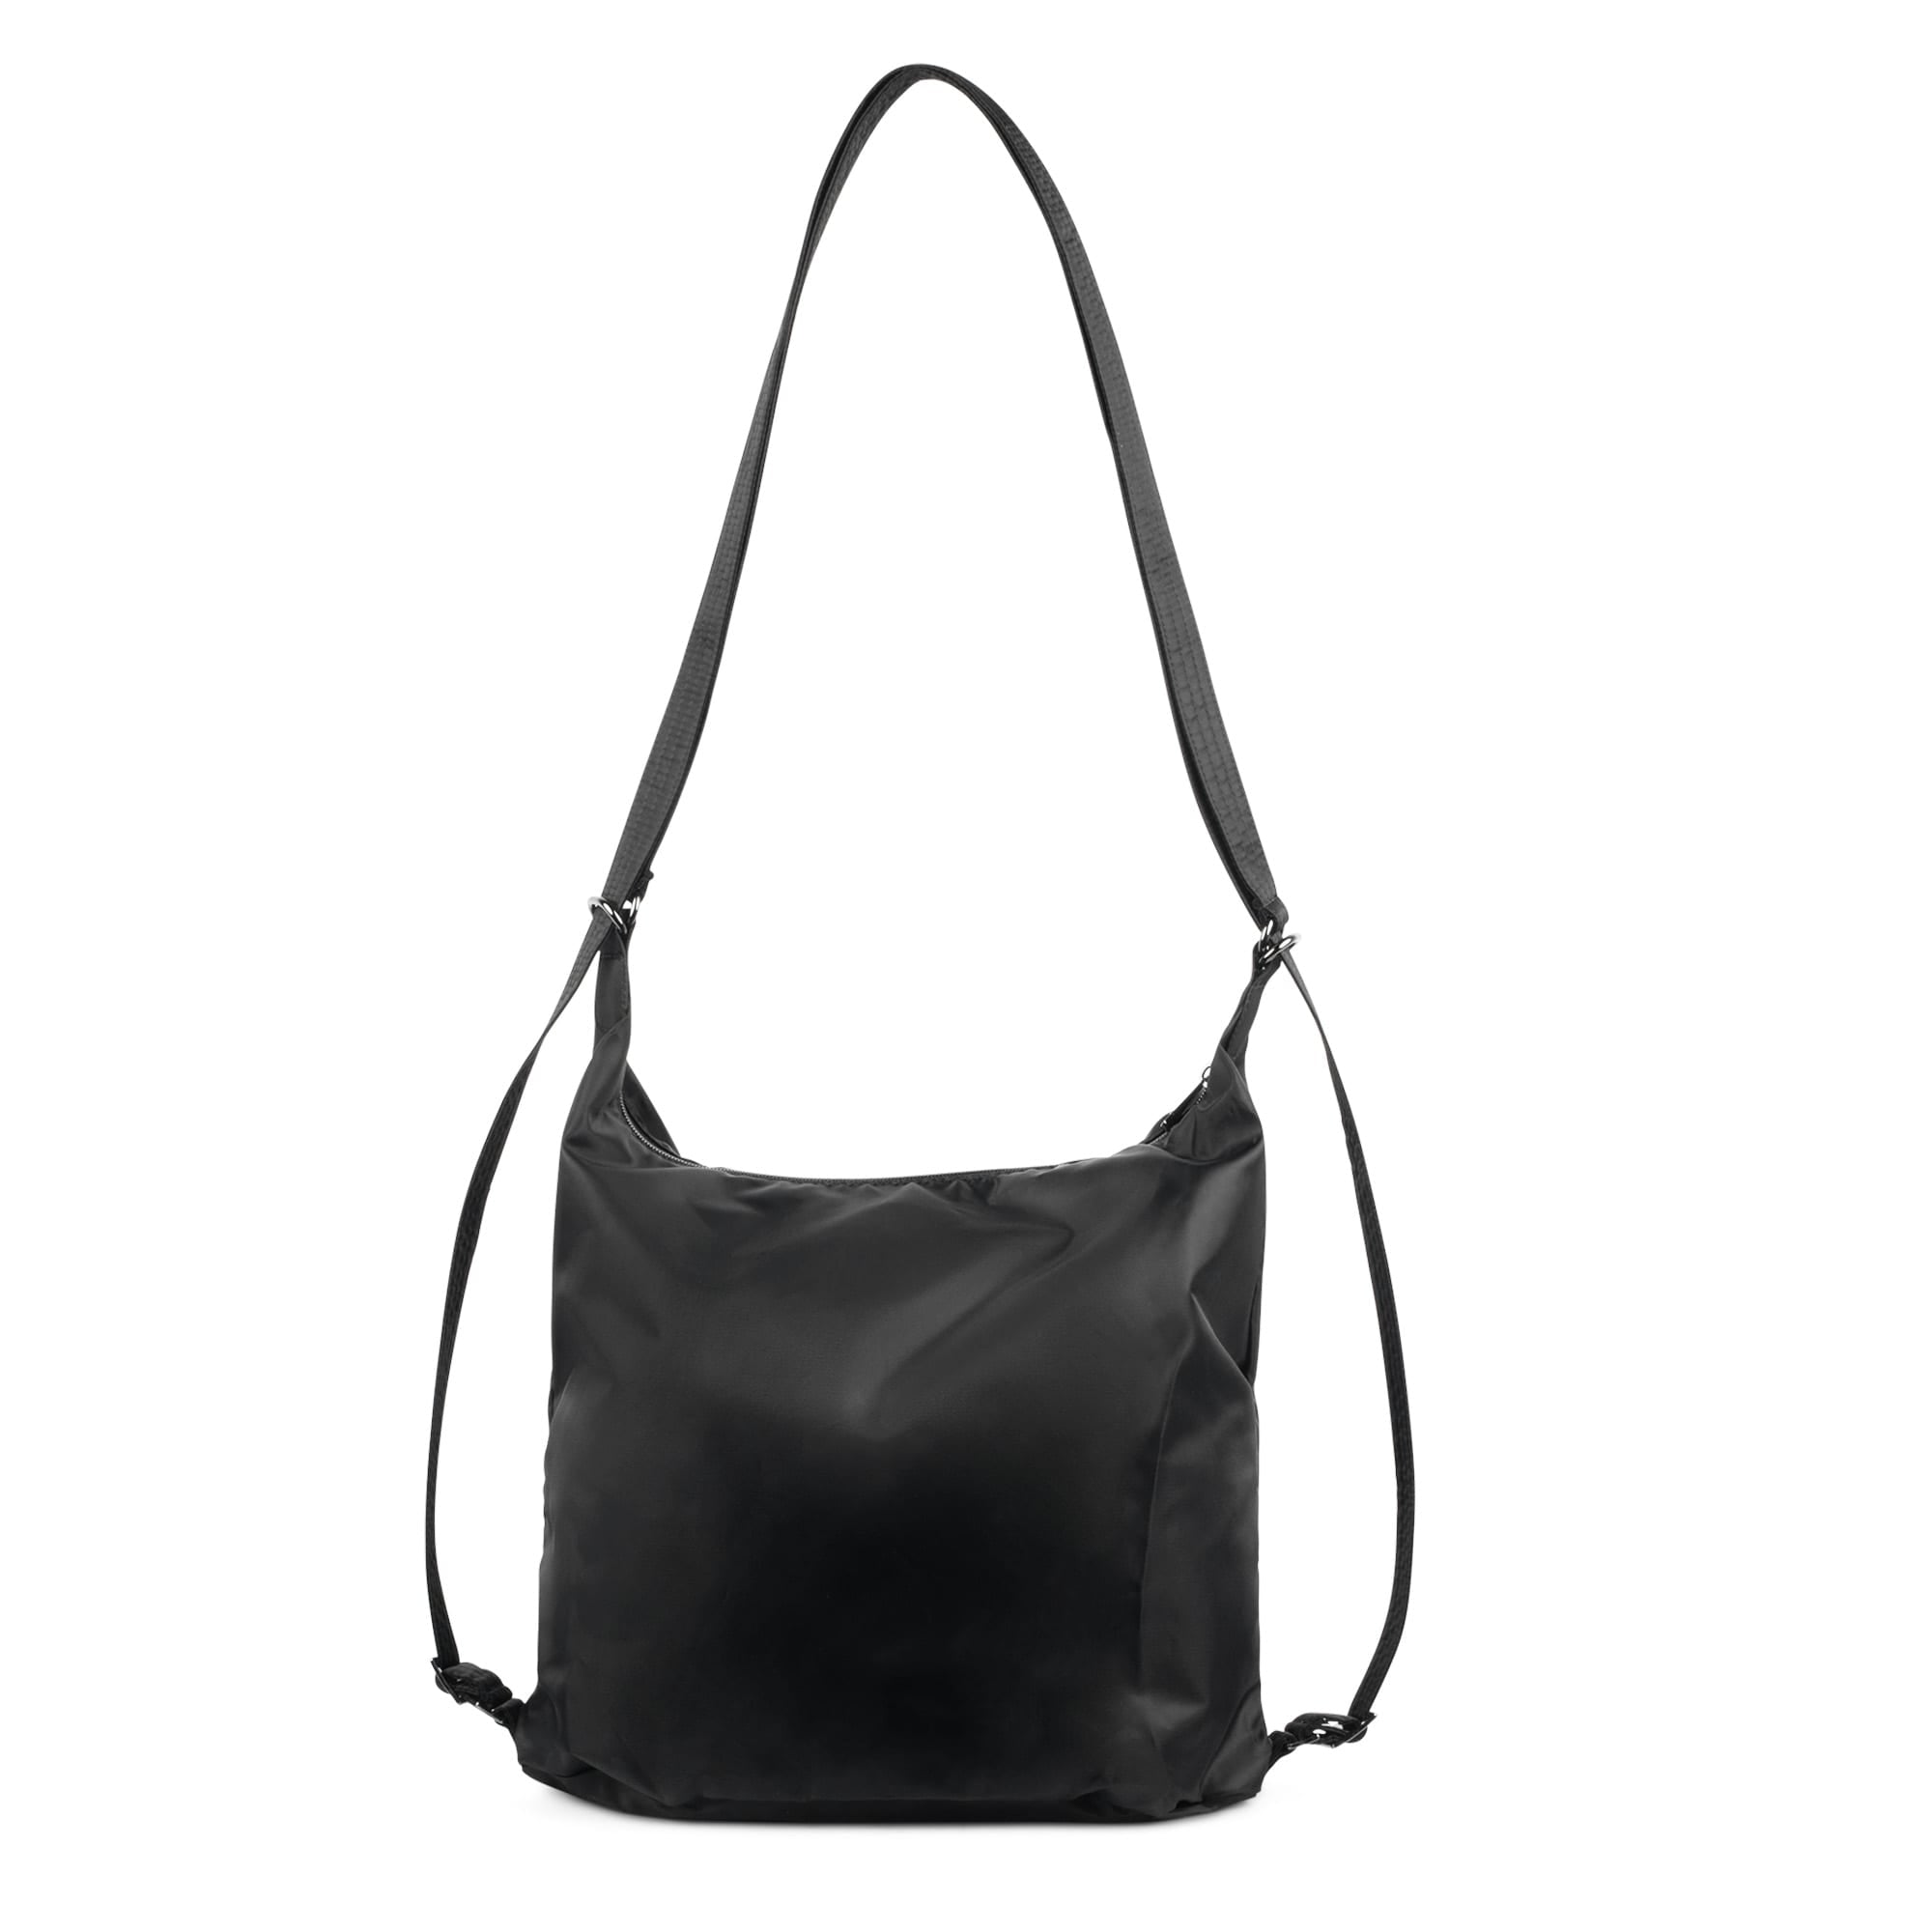 Zipliner Packable Convertible Hobo Bag - Luglife.com